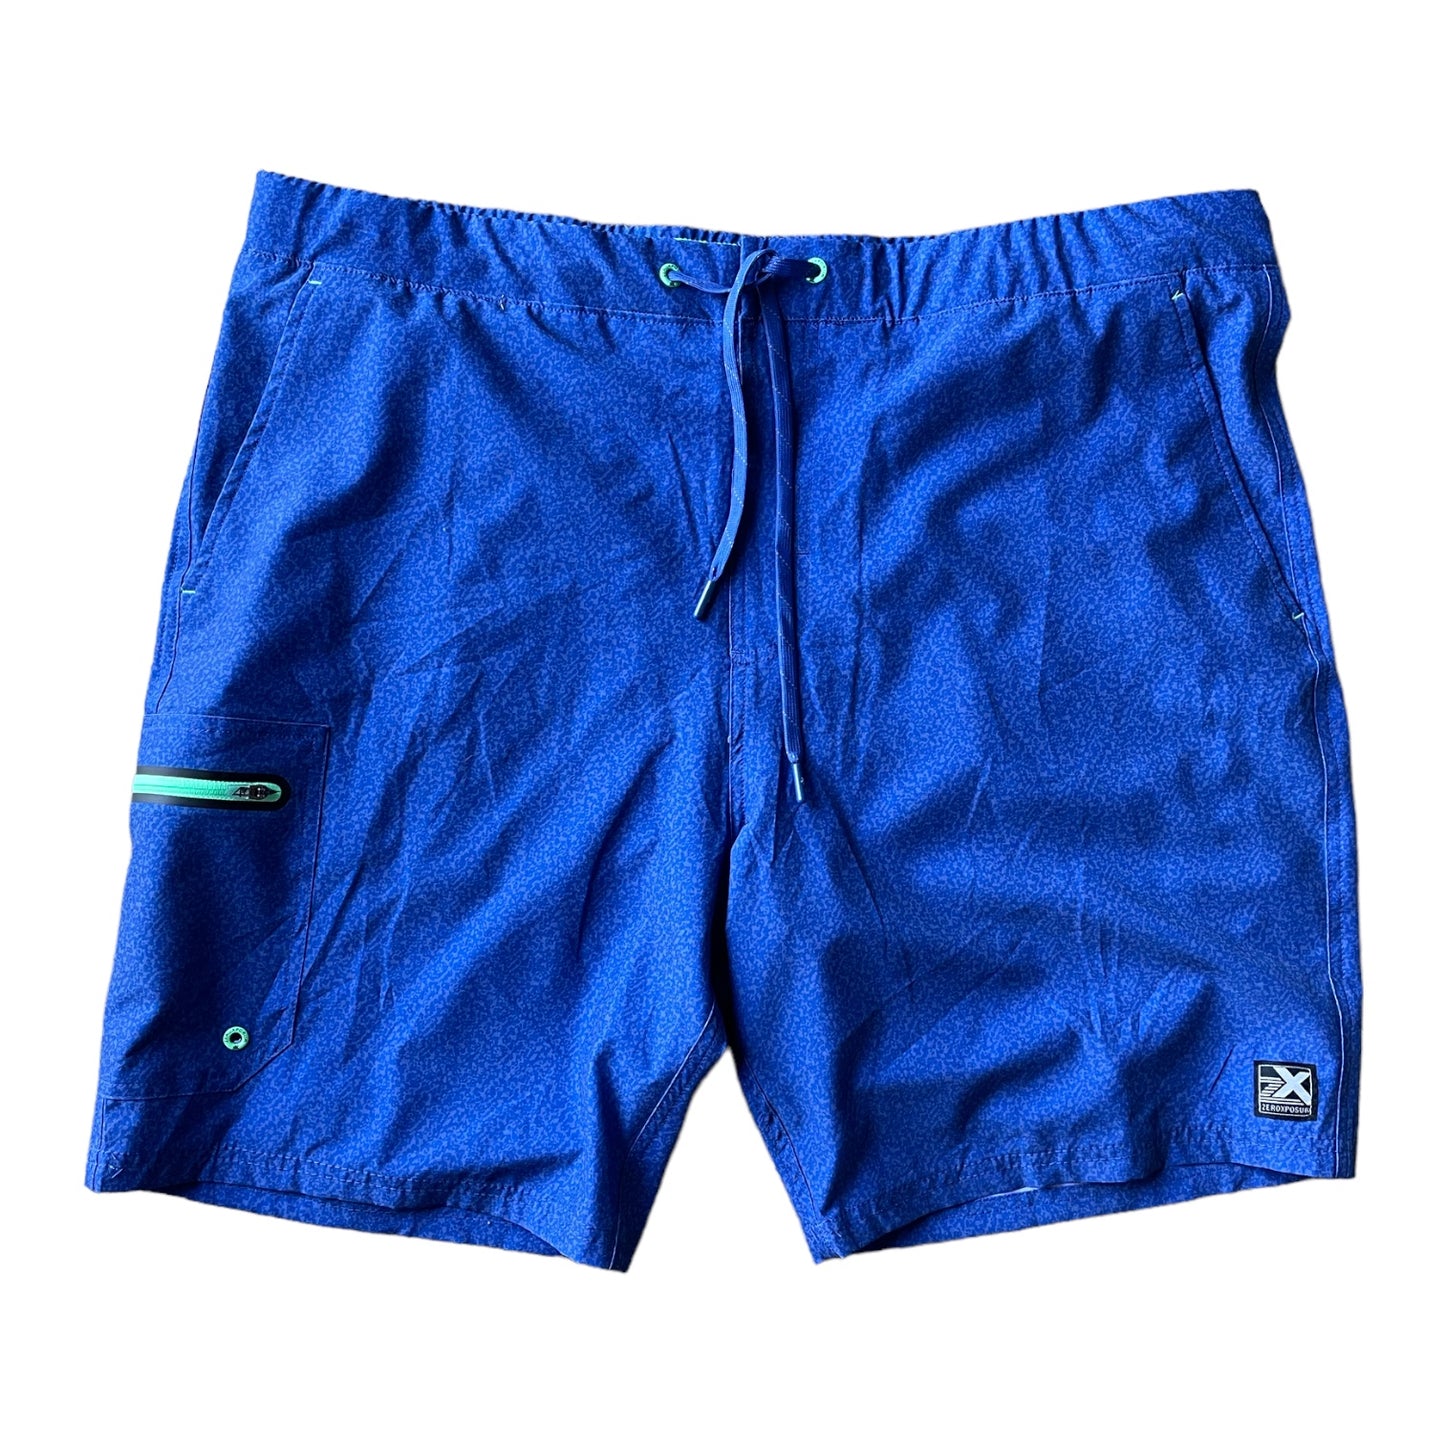 ZeroXposur Men's UPF 50+ Sun Protection Quick Dry Swim Trunks (Marine Blue, L)